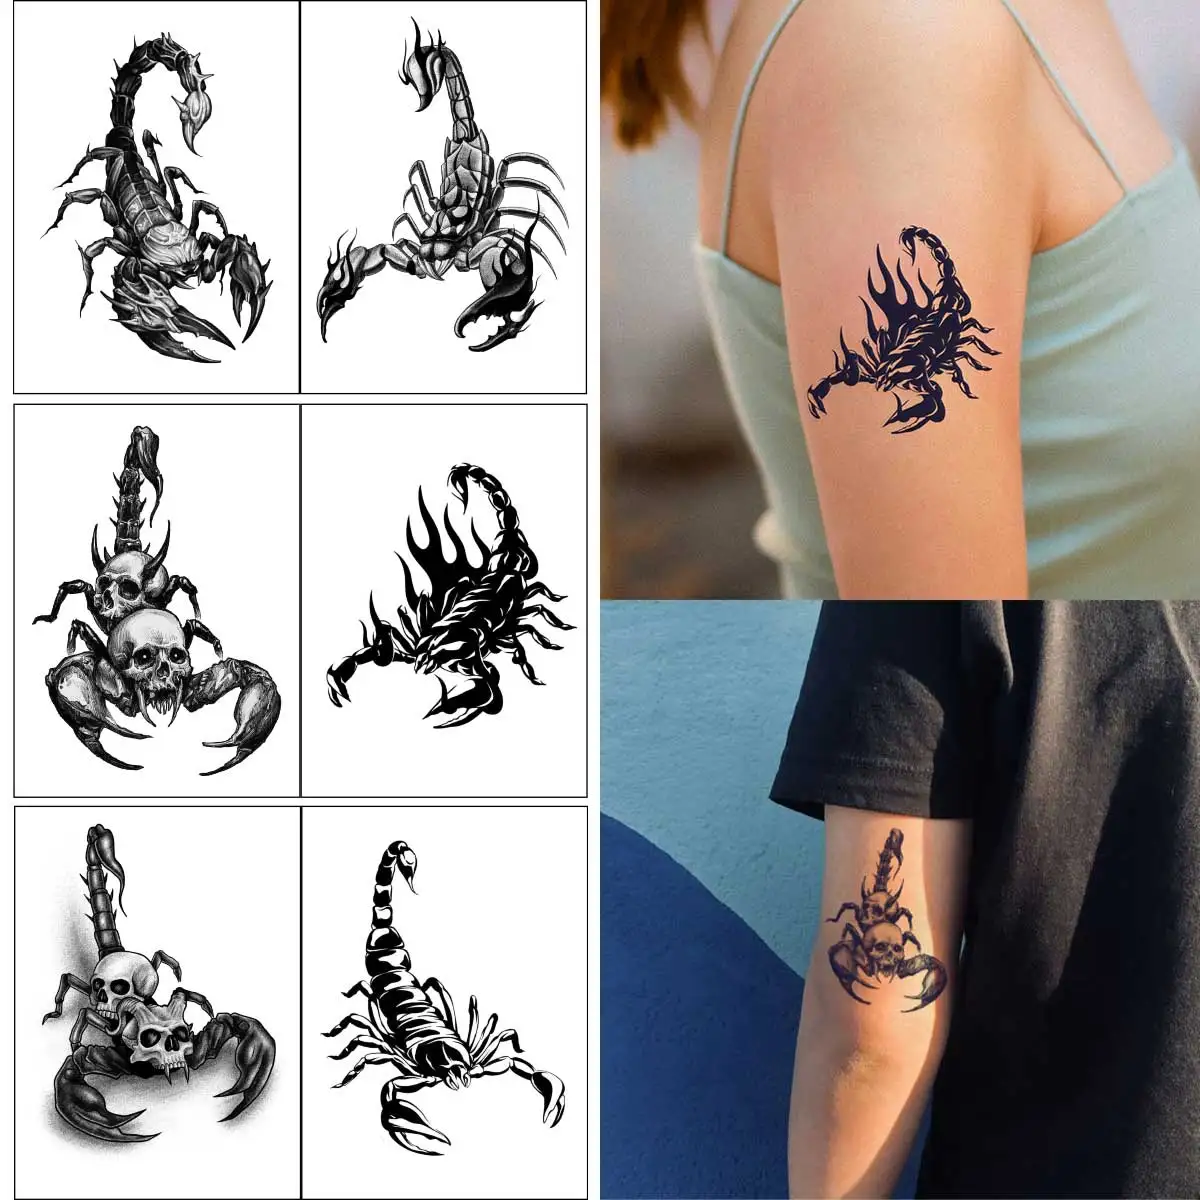 

4pcs Black Scorpion Series Temporary Tattoos for Women Men Gothic Neck Arm Tattoos Waterproof Fake Tattoo Body Art Halloween